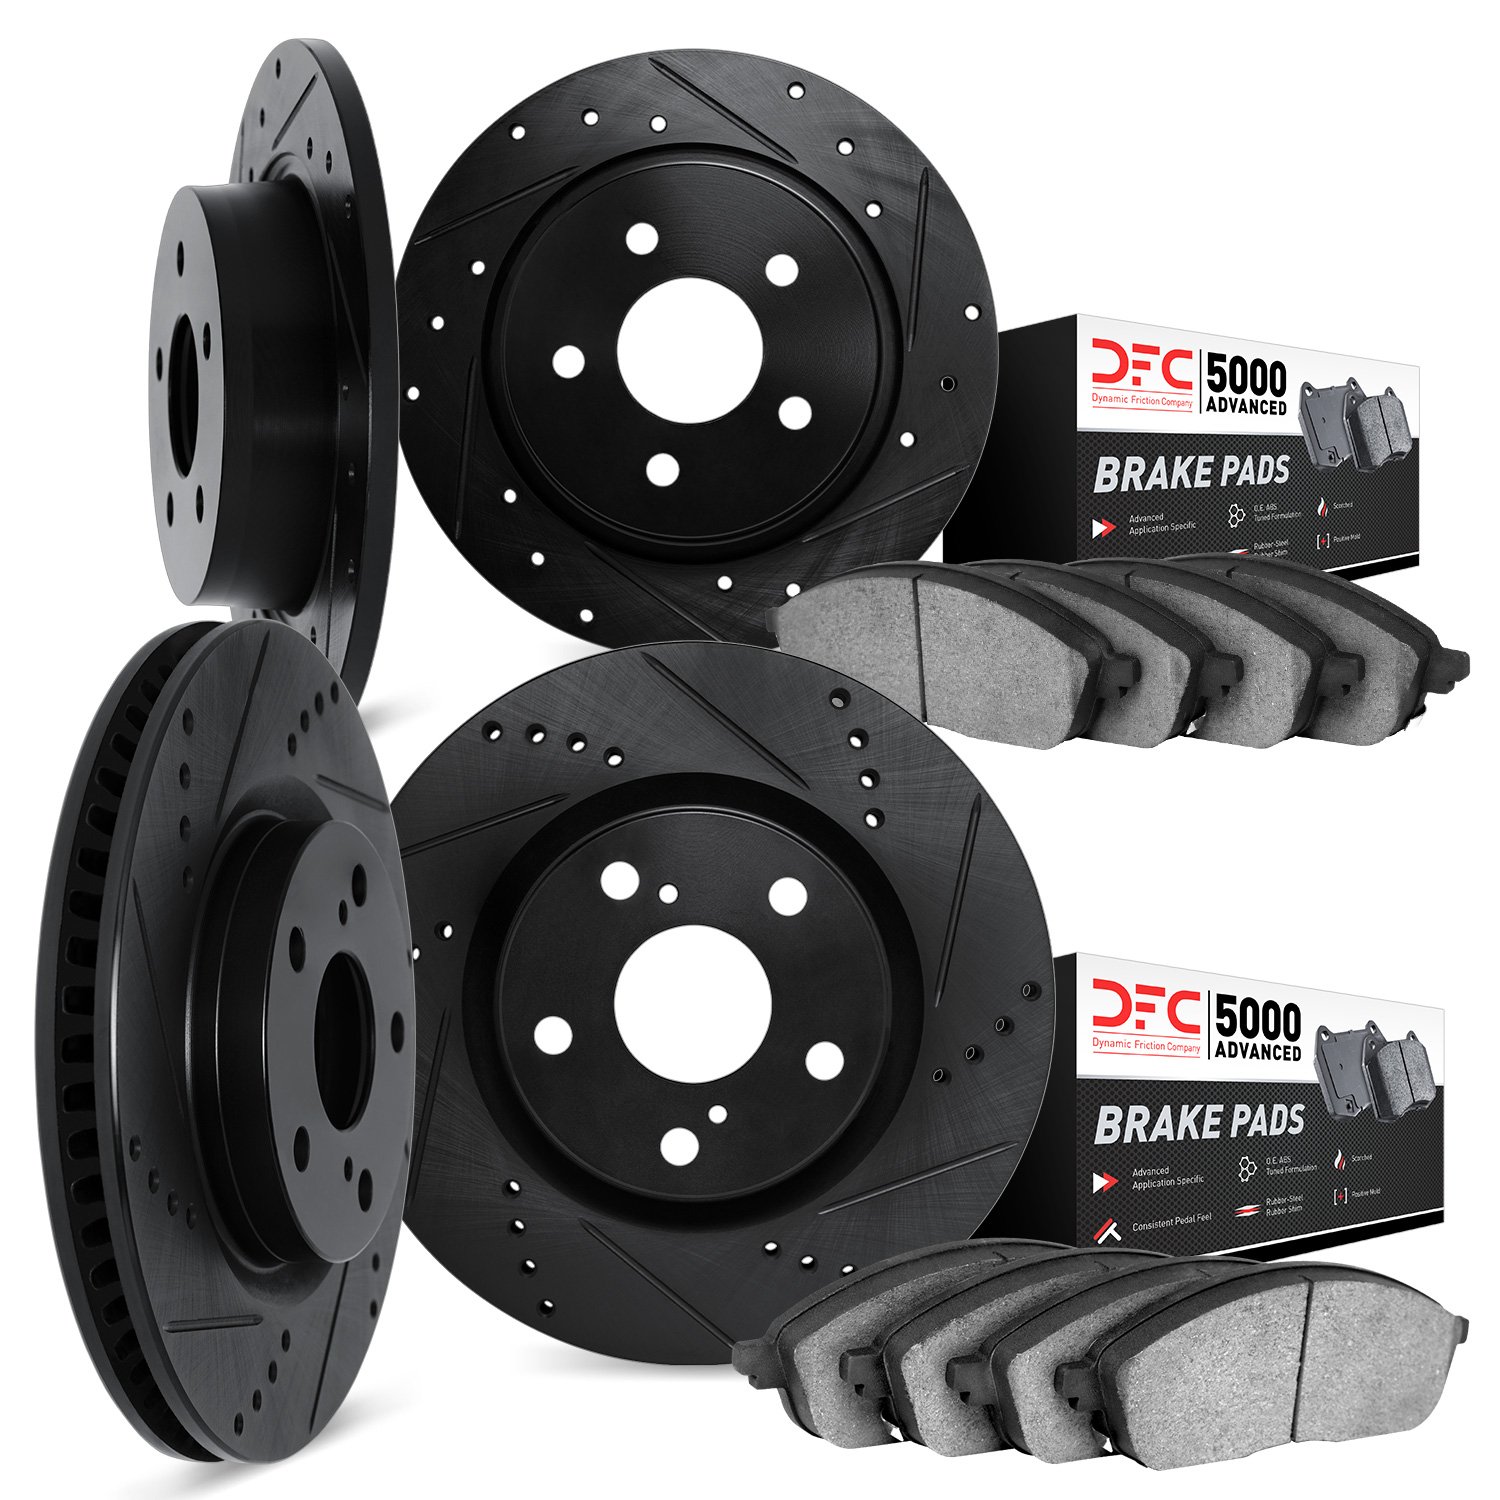 8504-40252 Drilled/Slotted Brake Rotors w/5000 Advanced Brake Pads Kit [Black], 2012-2020 Multiple Makes/Models, Position: Front